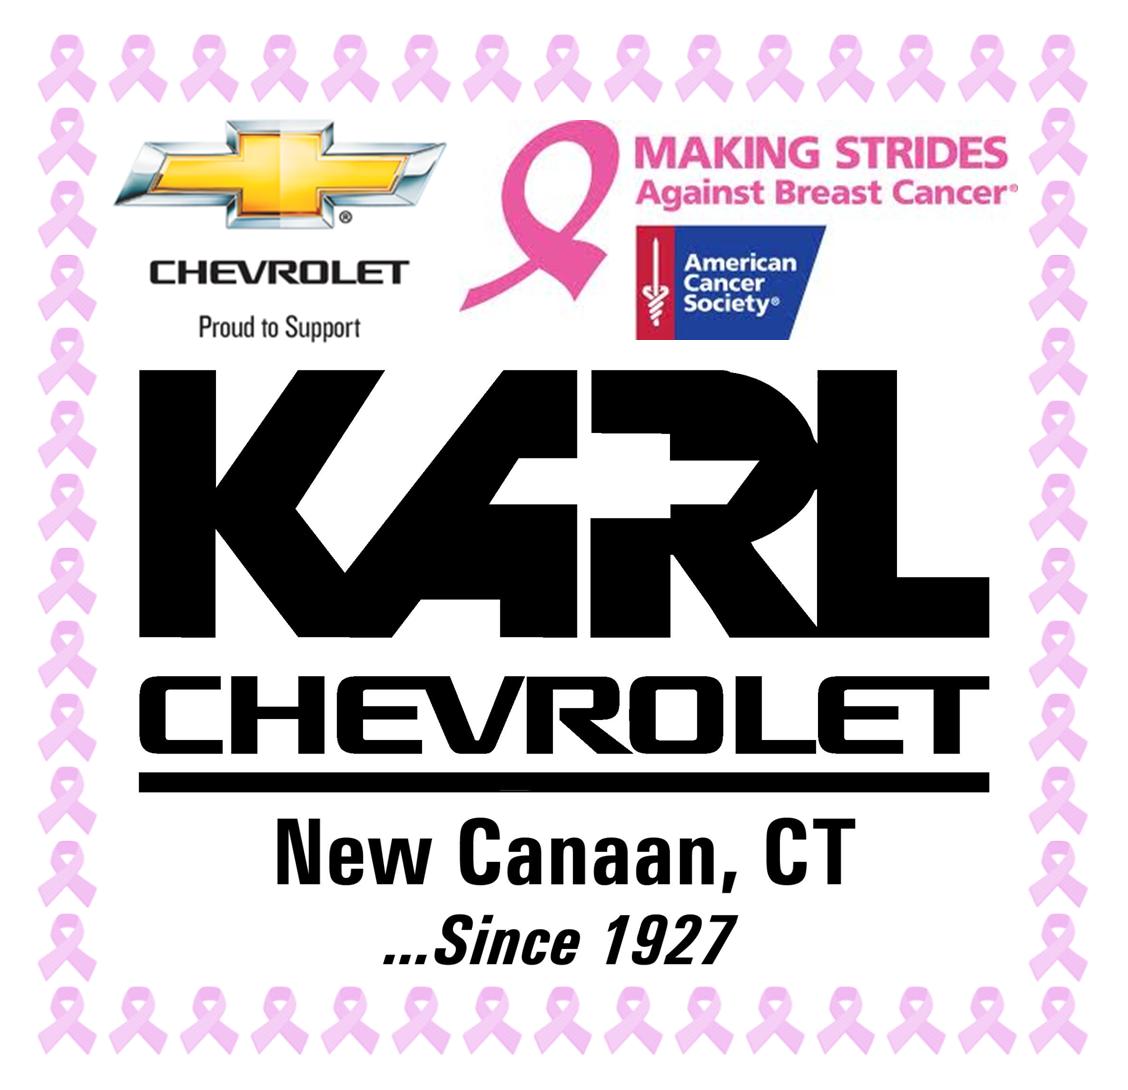 Team Karl Chevrolet is Making Strides Against Breast Cancer